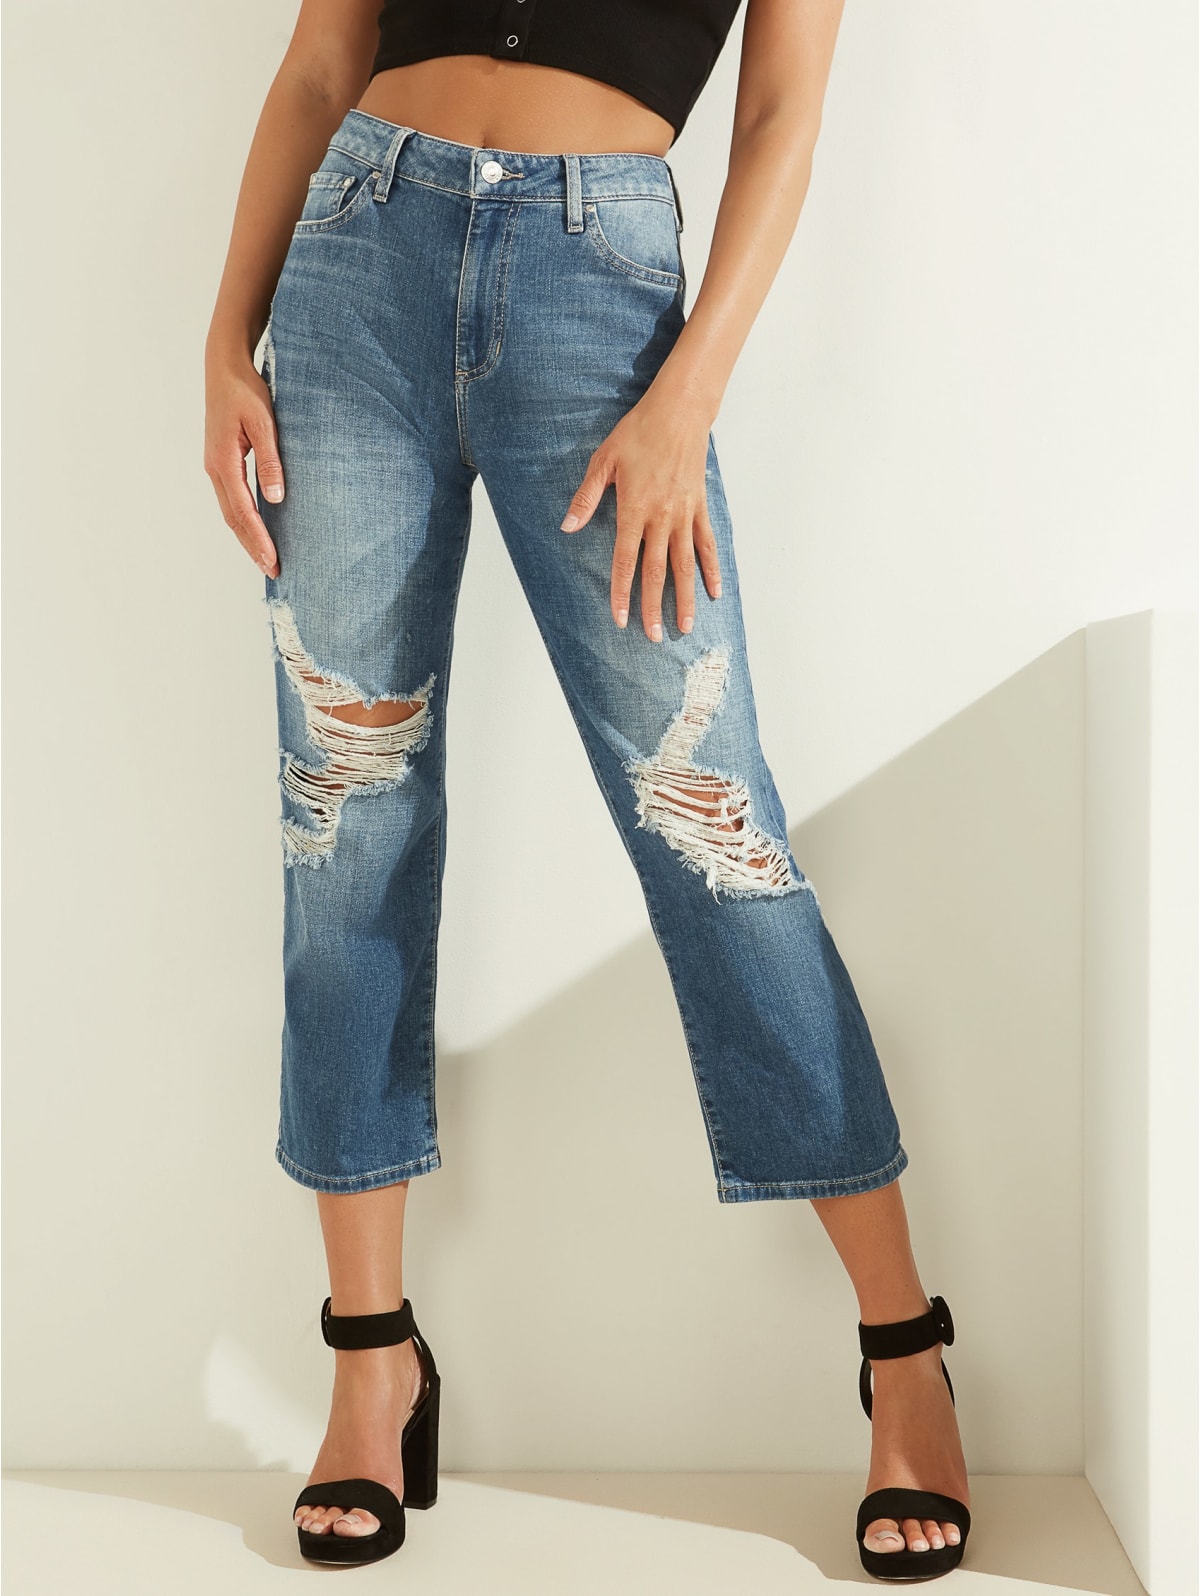 mother jeans ebay